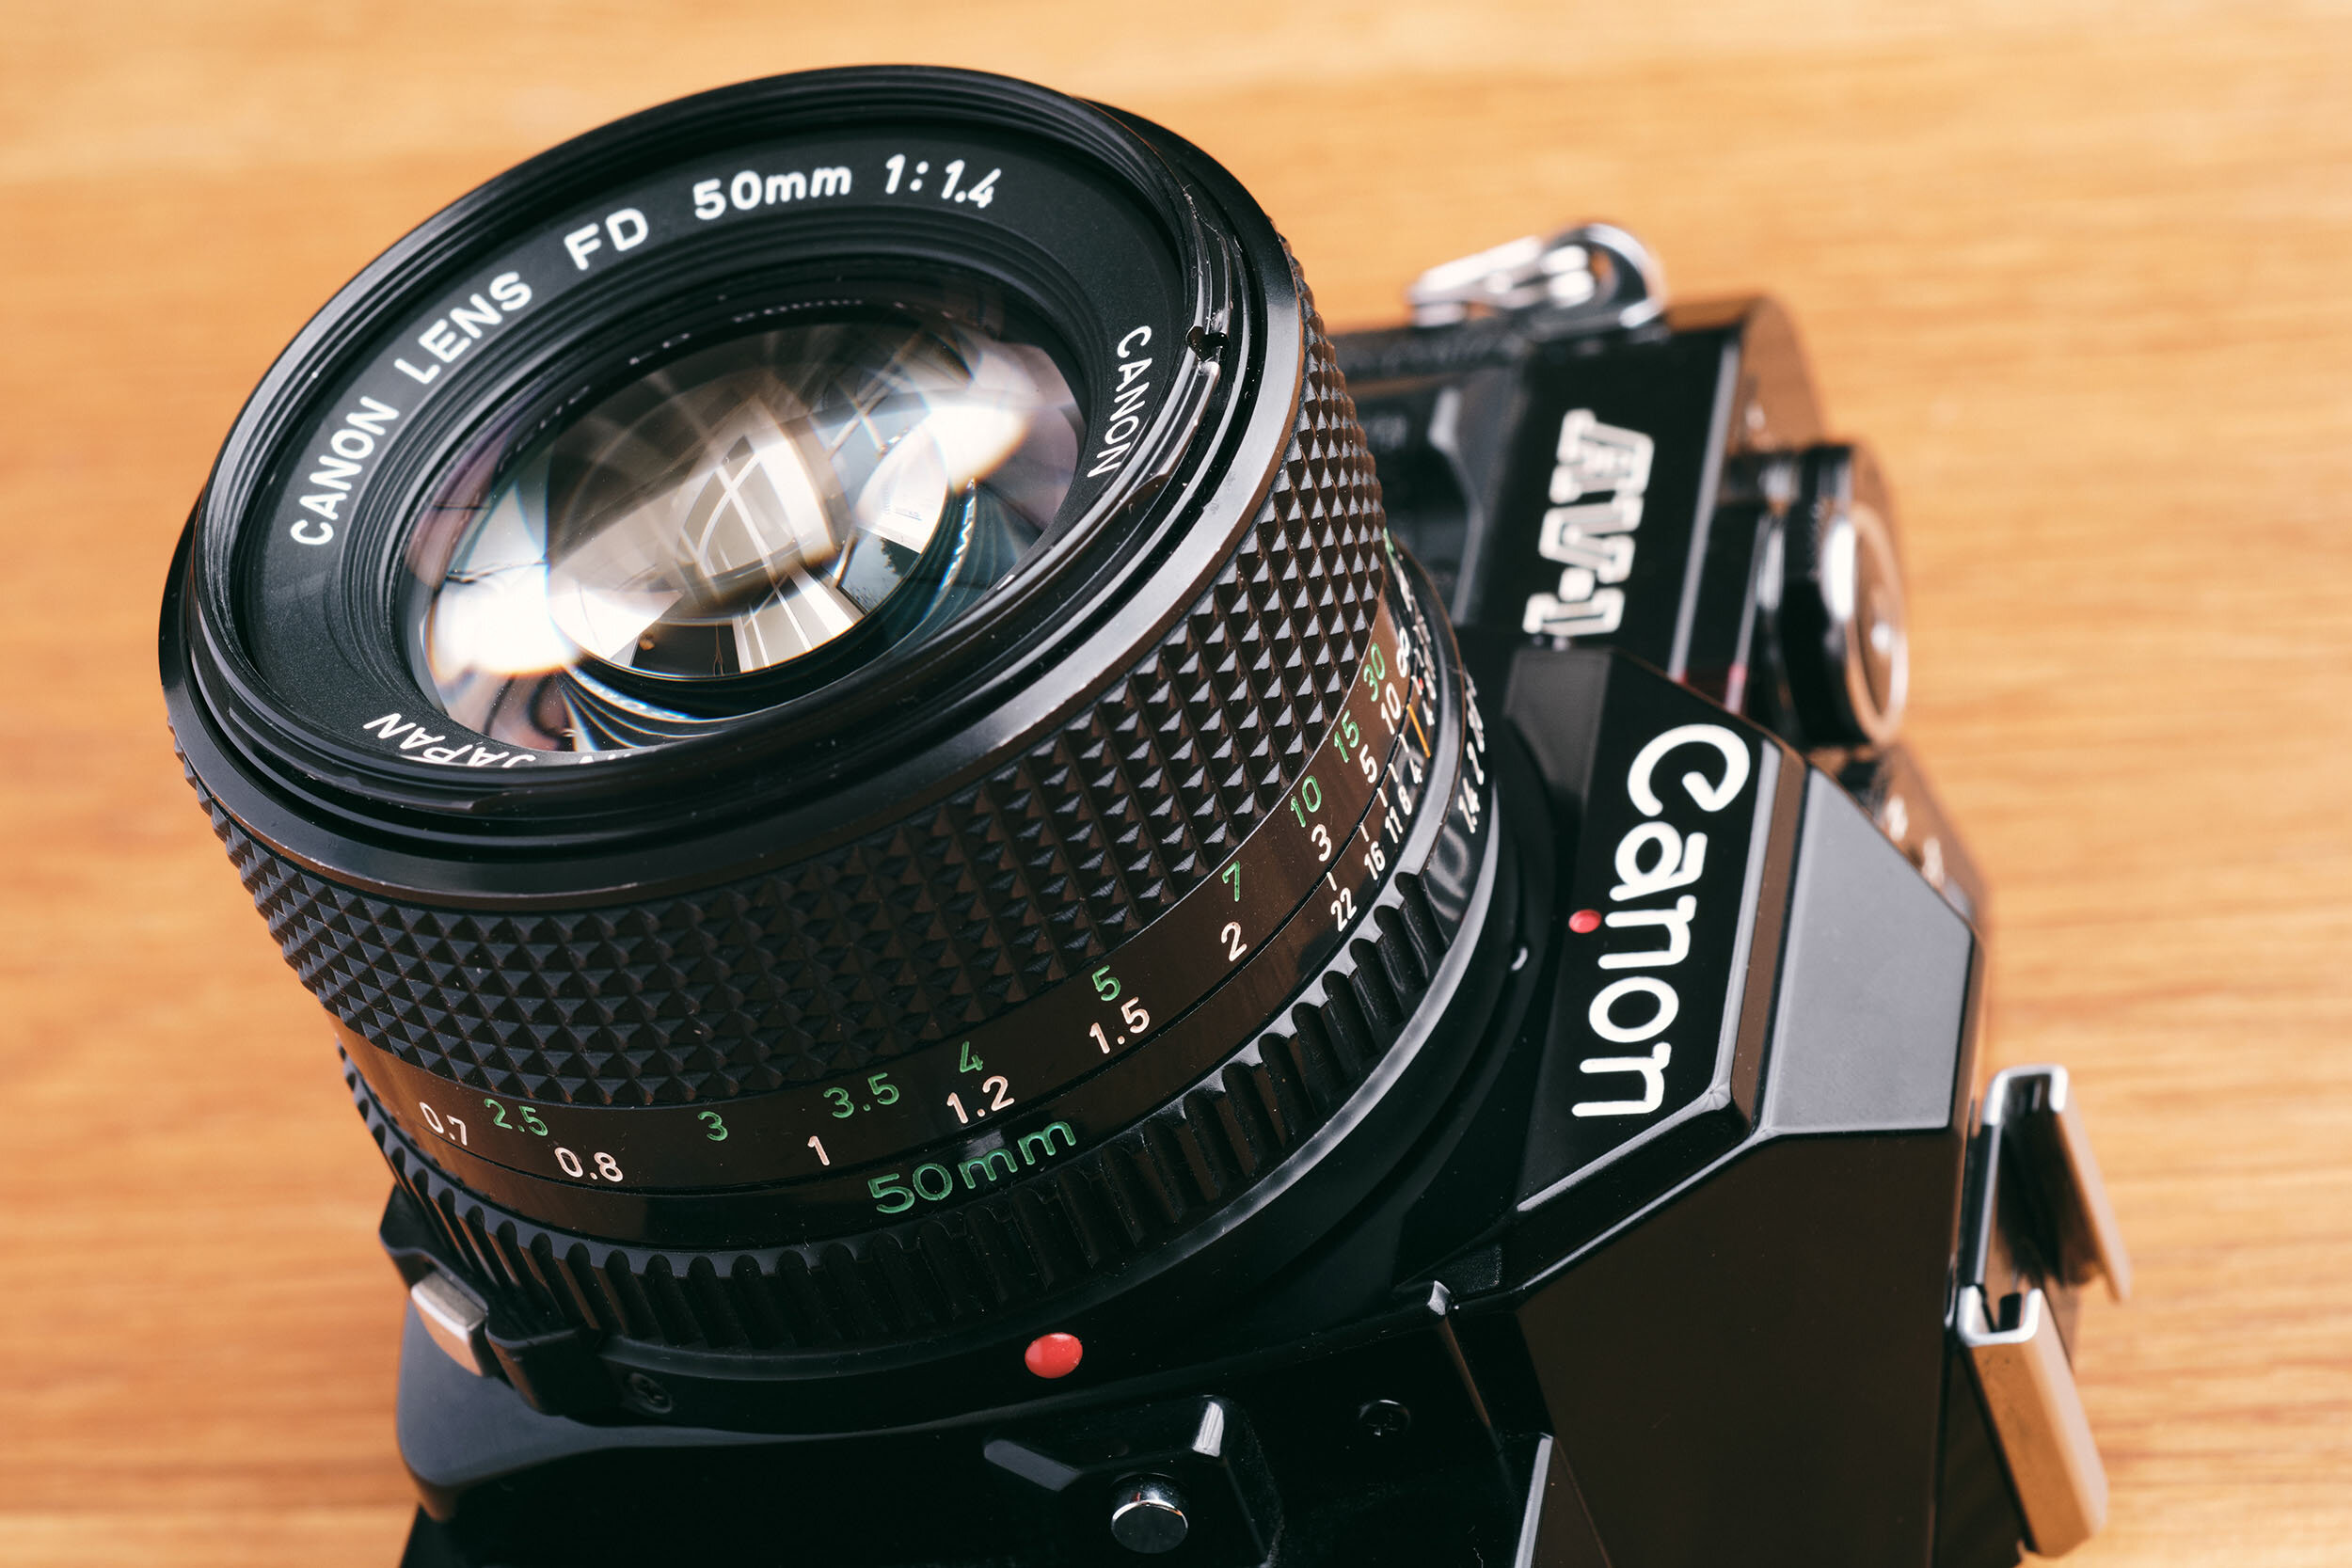 Beperkt afgunst Groot universum Canon FD 50mm f/1.4 Review | 5050 Travelog